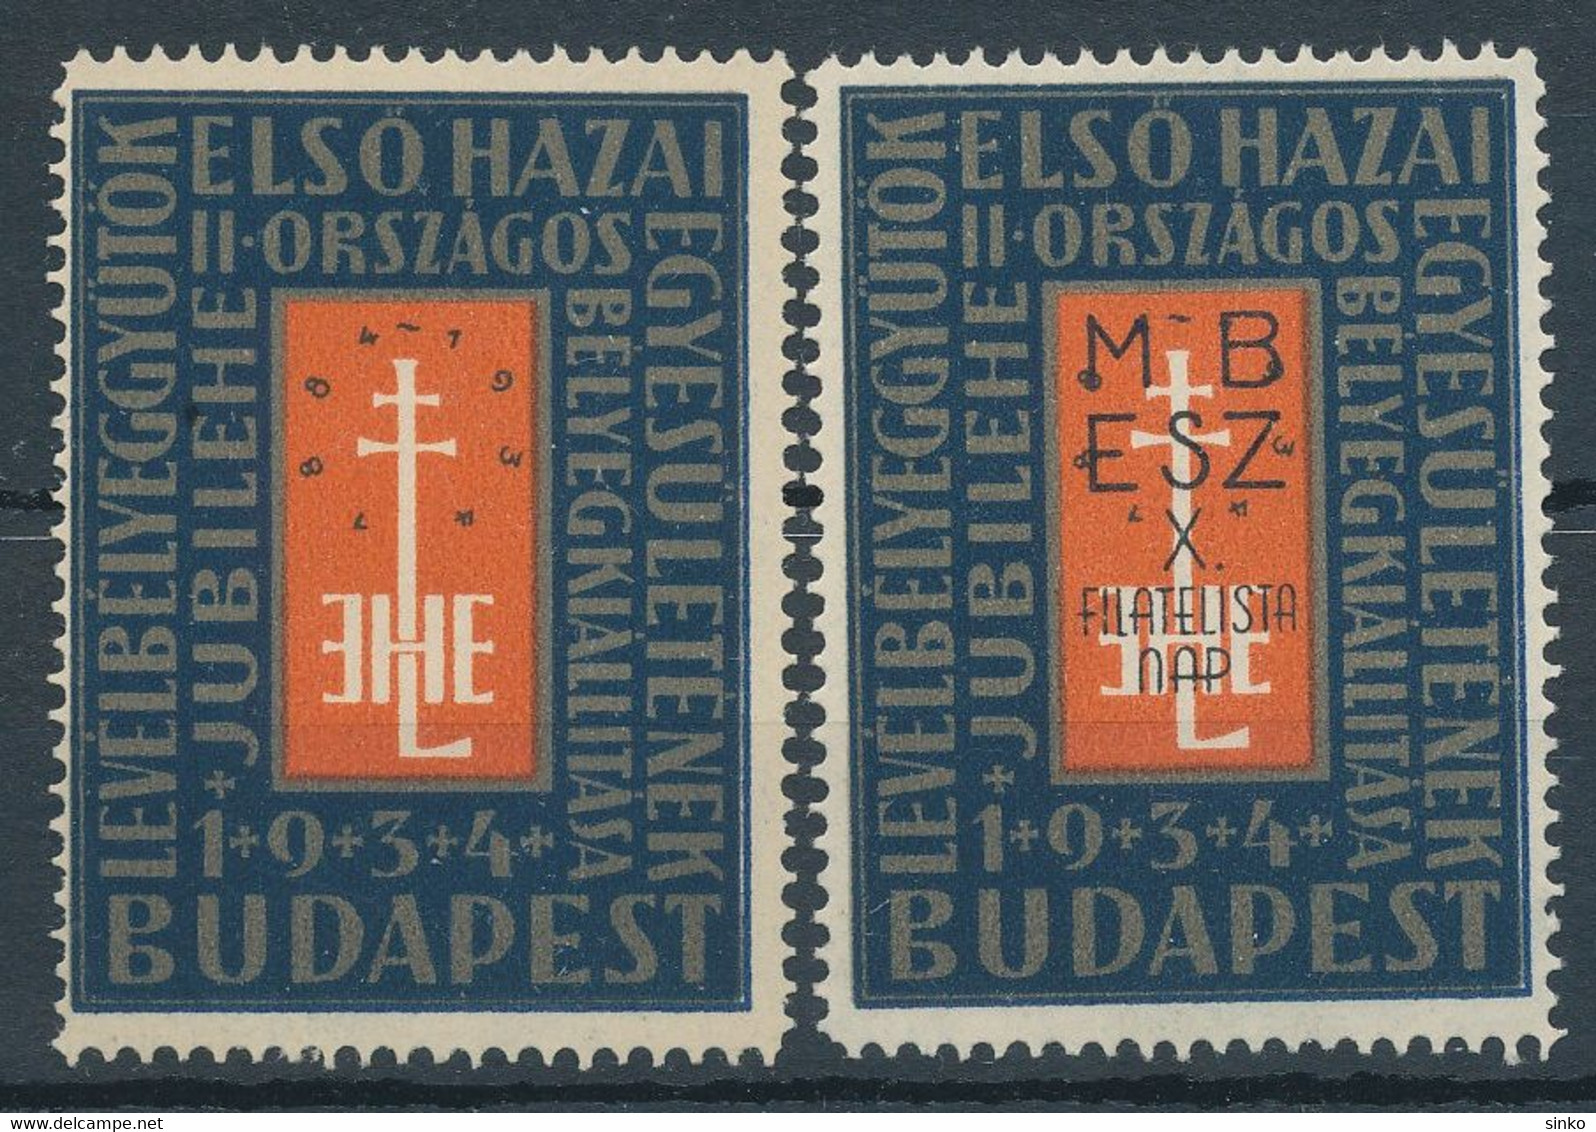 1934. Jubilehe Stamp Exhibition Budapest - Souvenirbögen